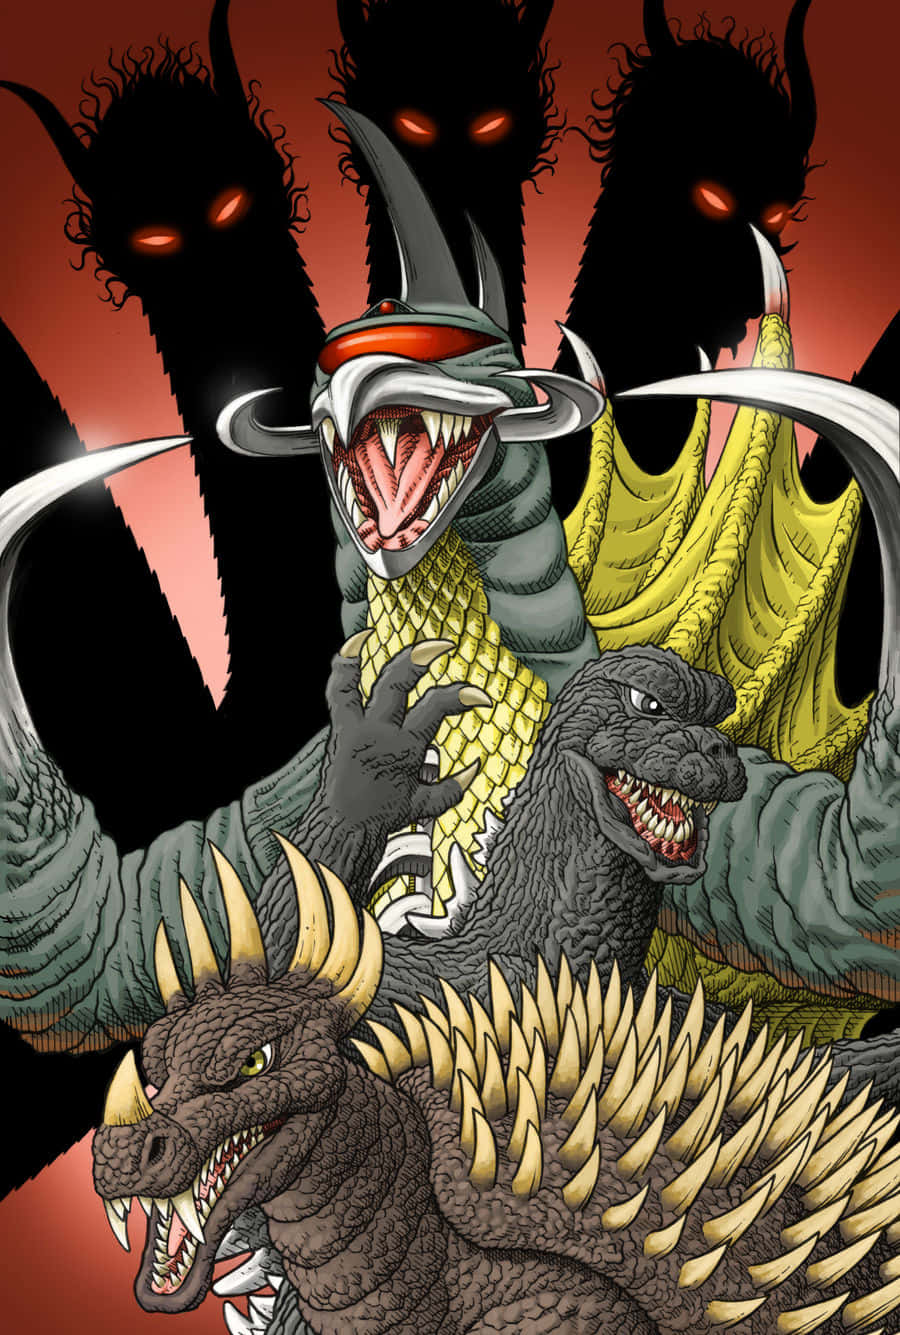 Godzilla and Gigan engaging in an intense battle Wallpaper